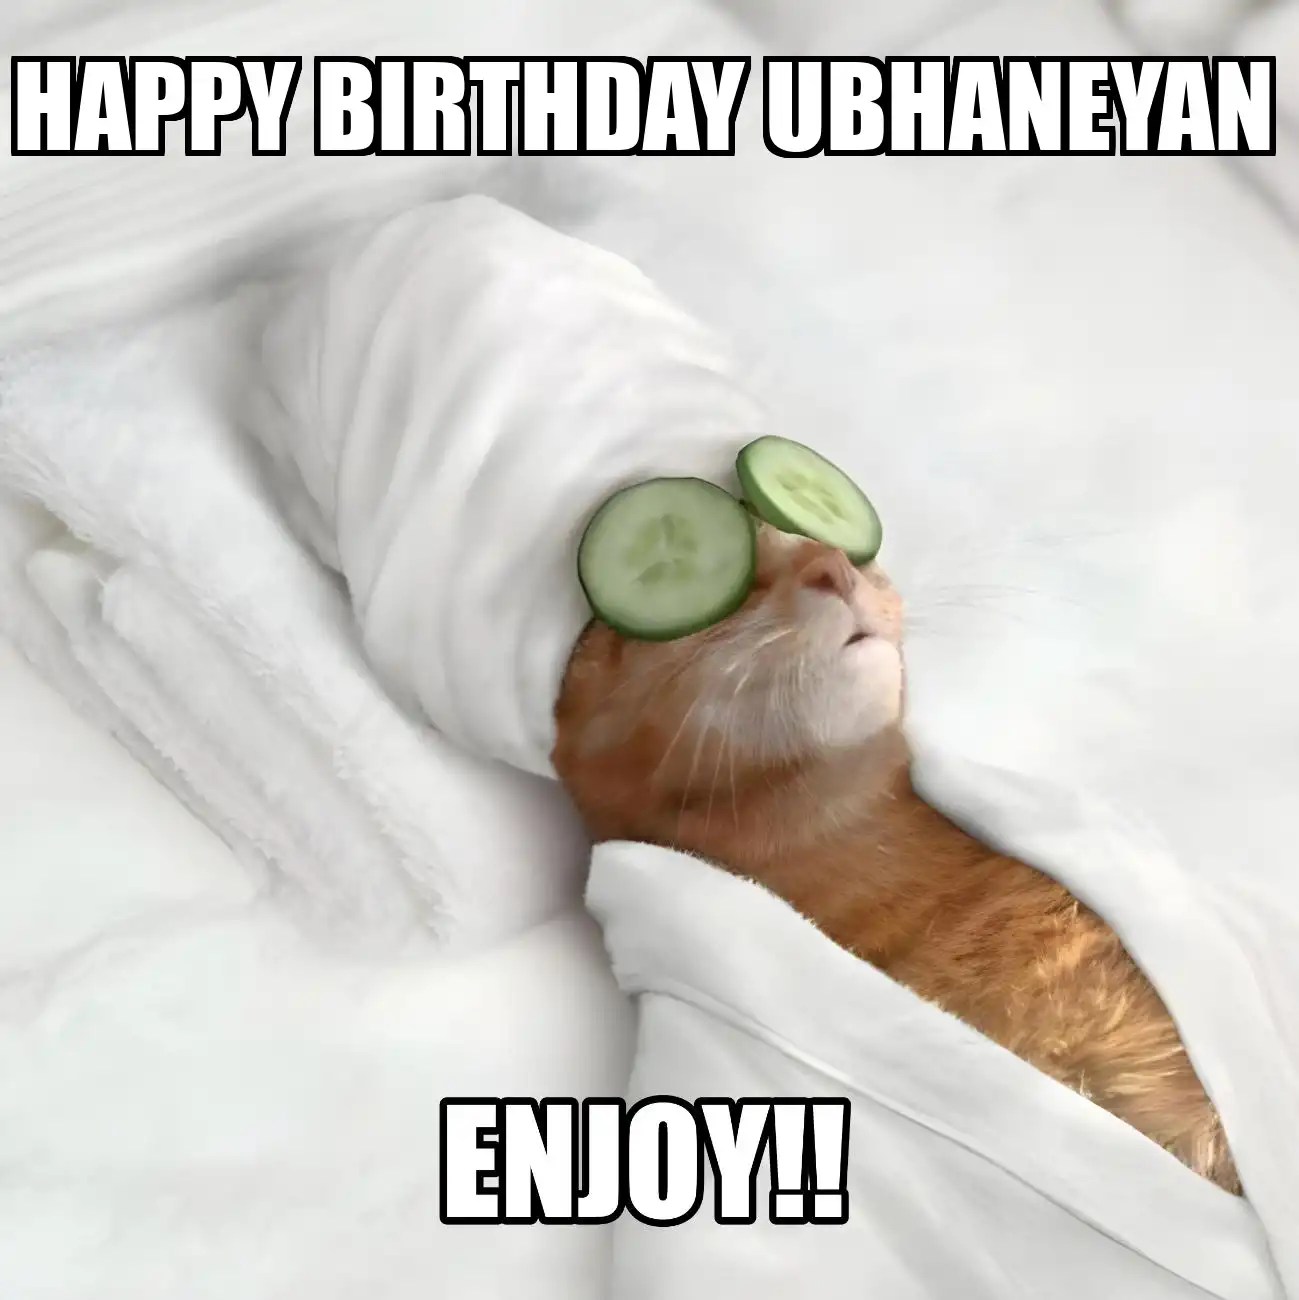 Happy Birthday Ubhaneyan Enjoy Cat Meme